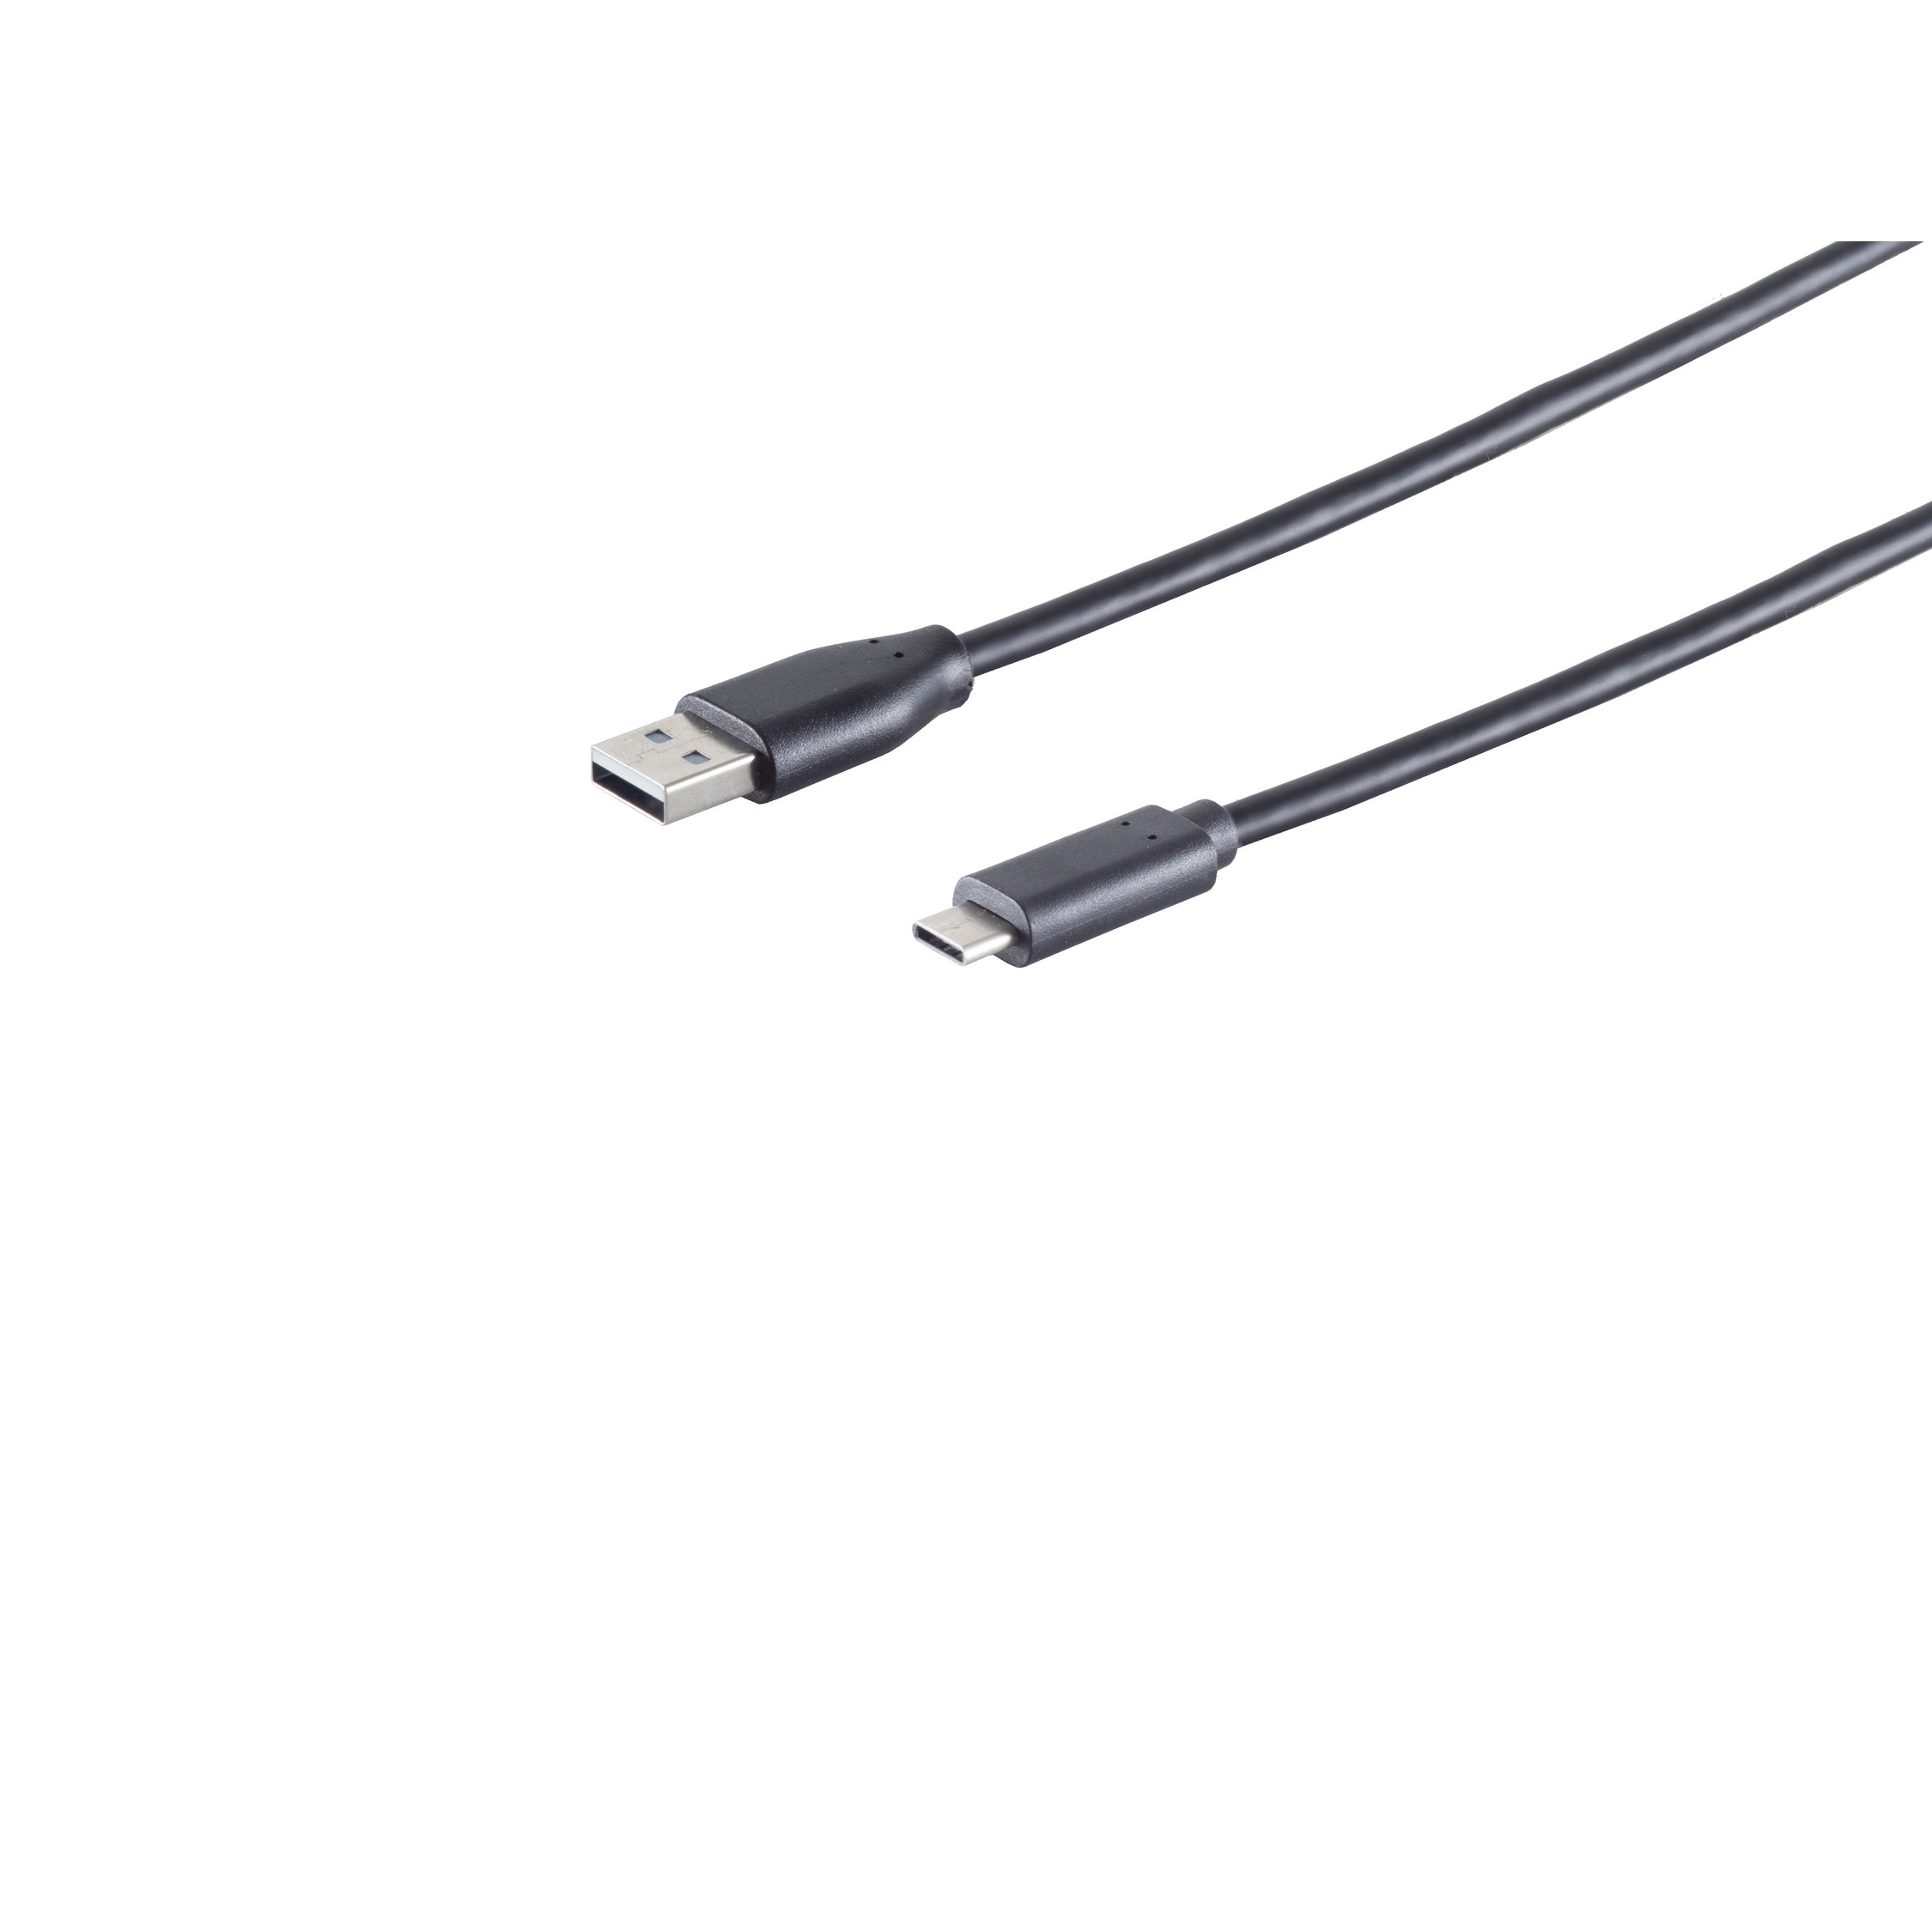 C-Stecker USB Kabel, S/CONN - 3.1 1,8m CONNECTIVITY 2.0 A-Stecker, USB Kabel MAXIMUM